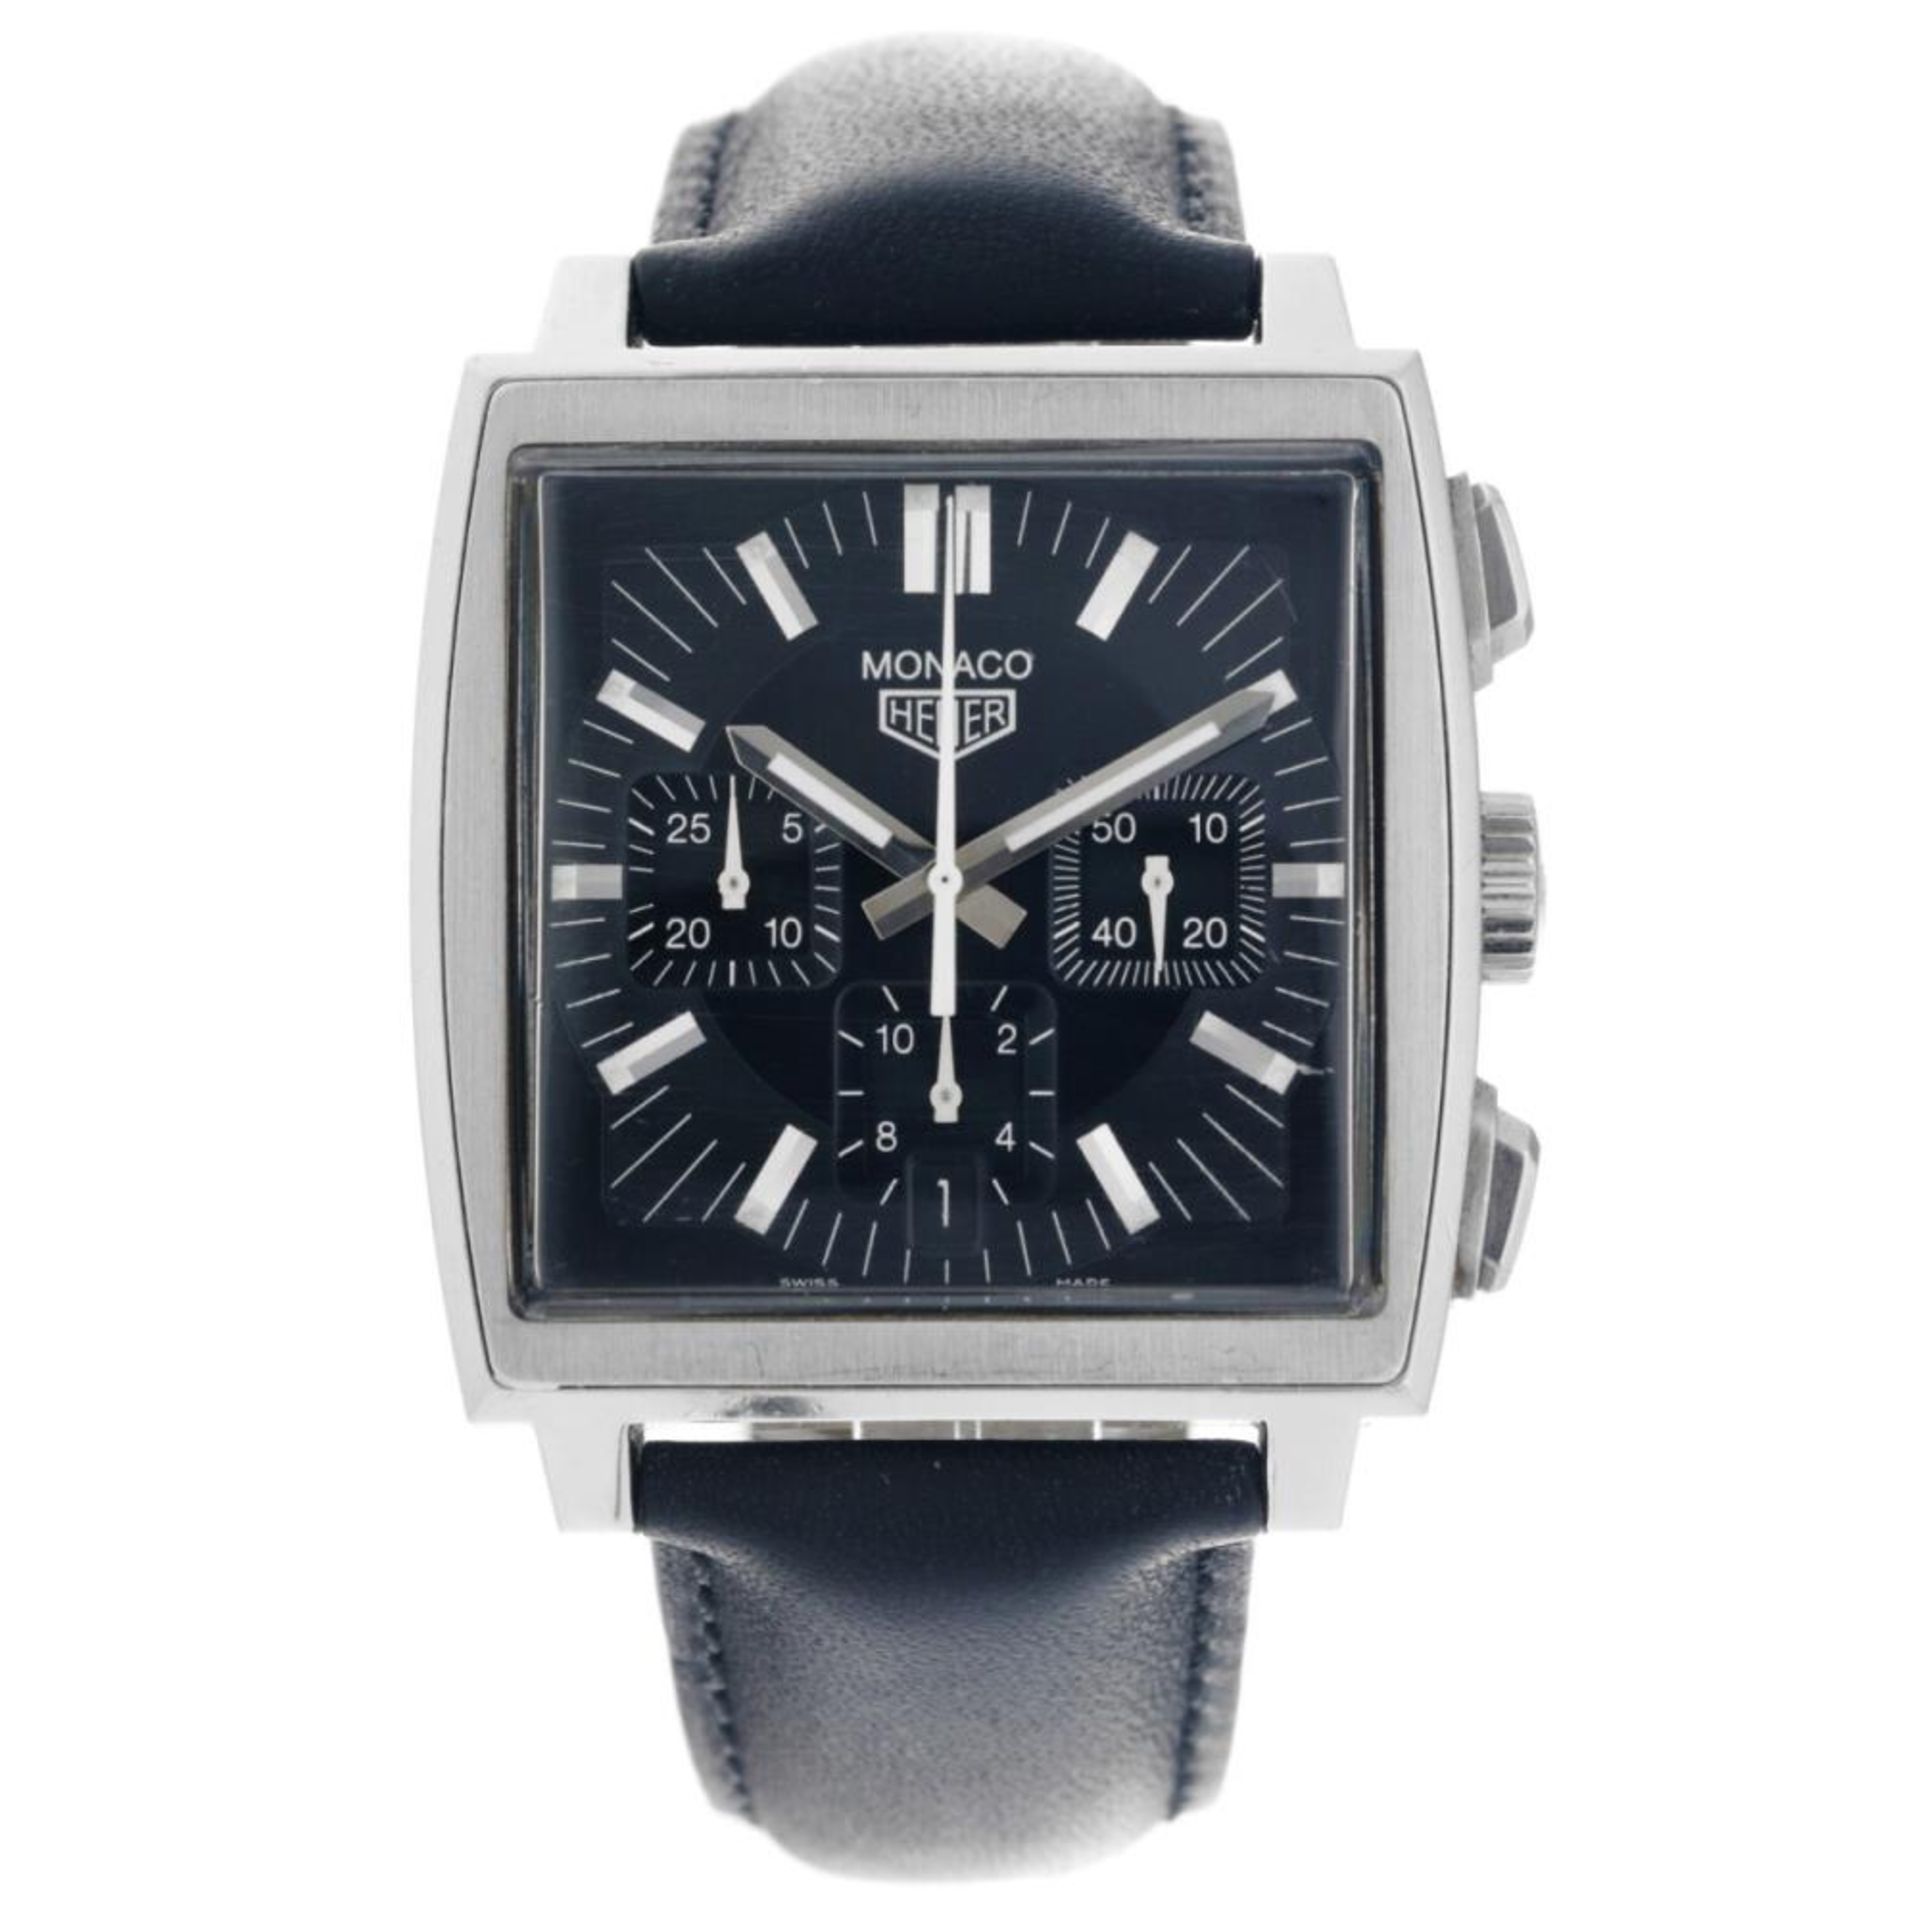 Tag Heuer Monaco CS2111 - Men's watch - approx. 2000.